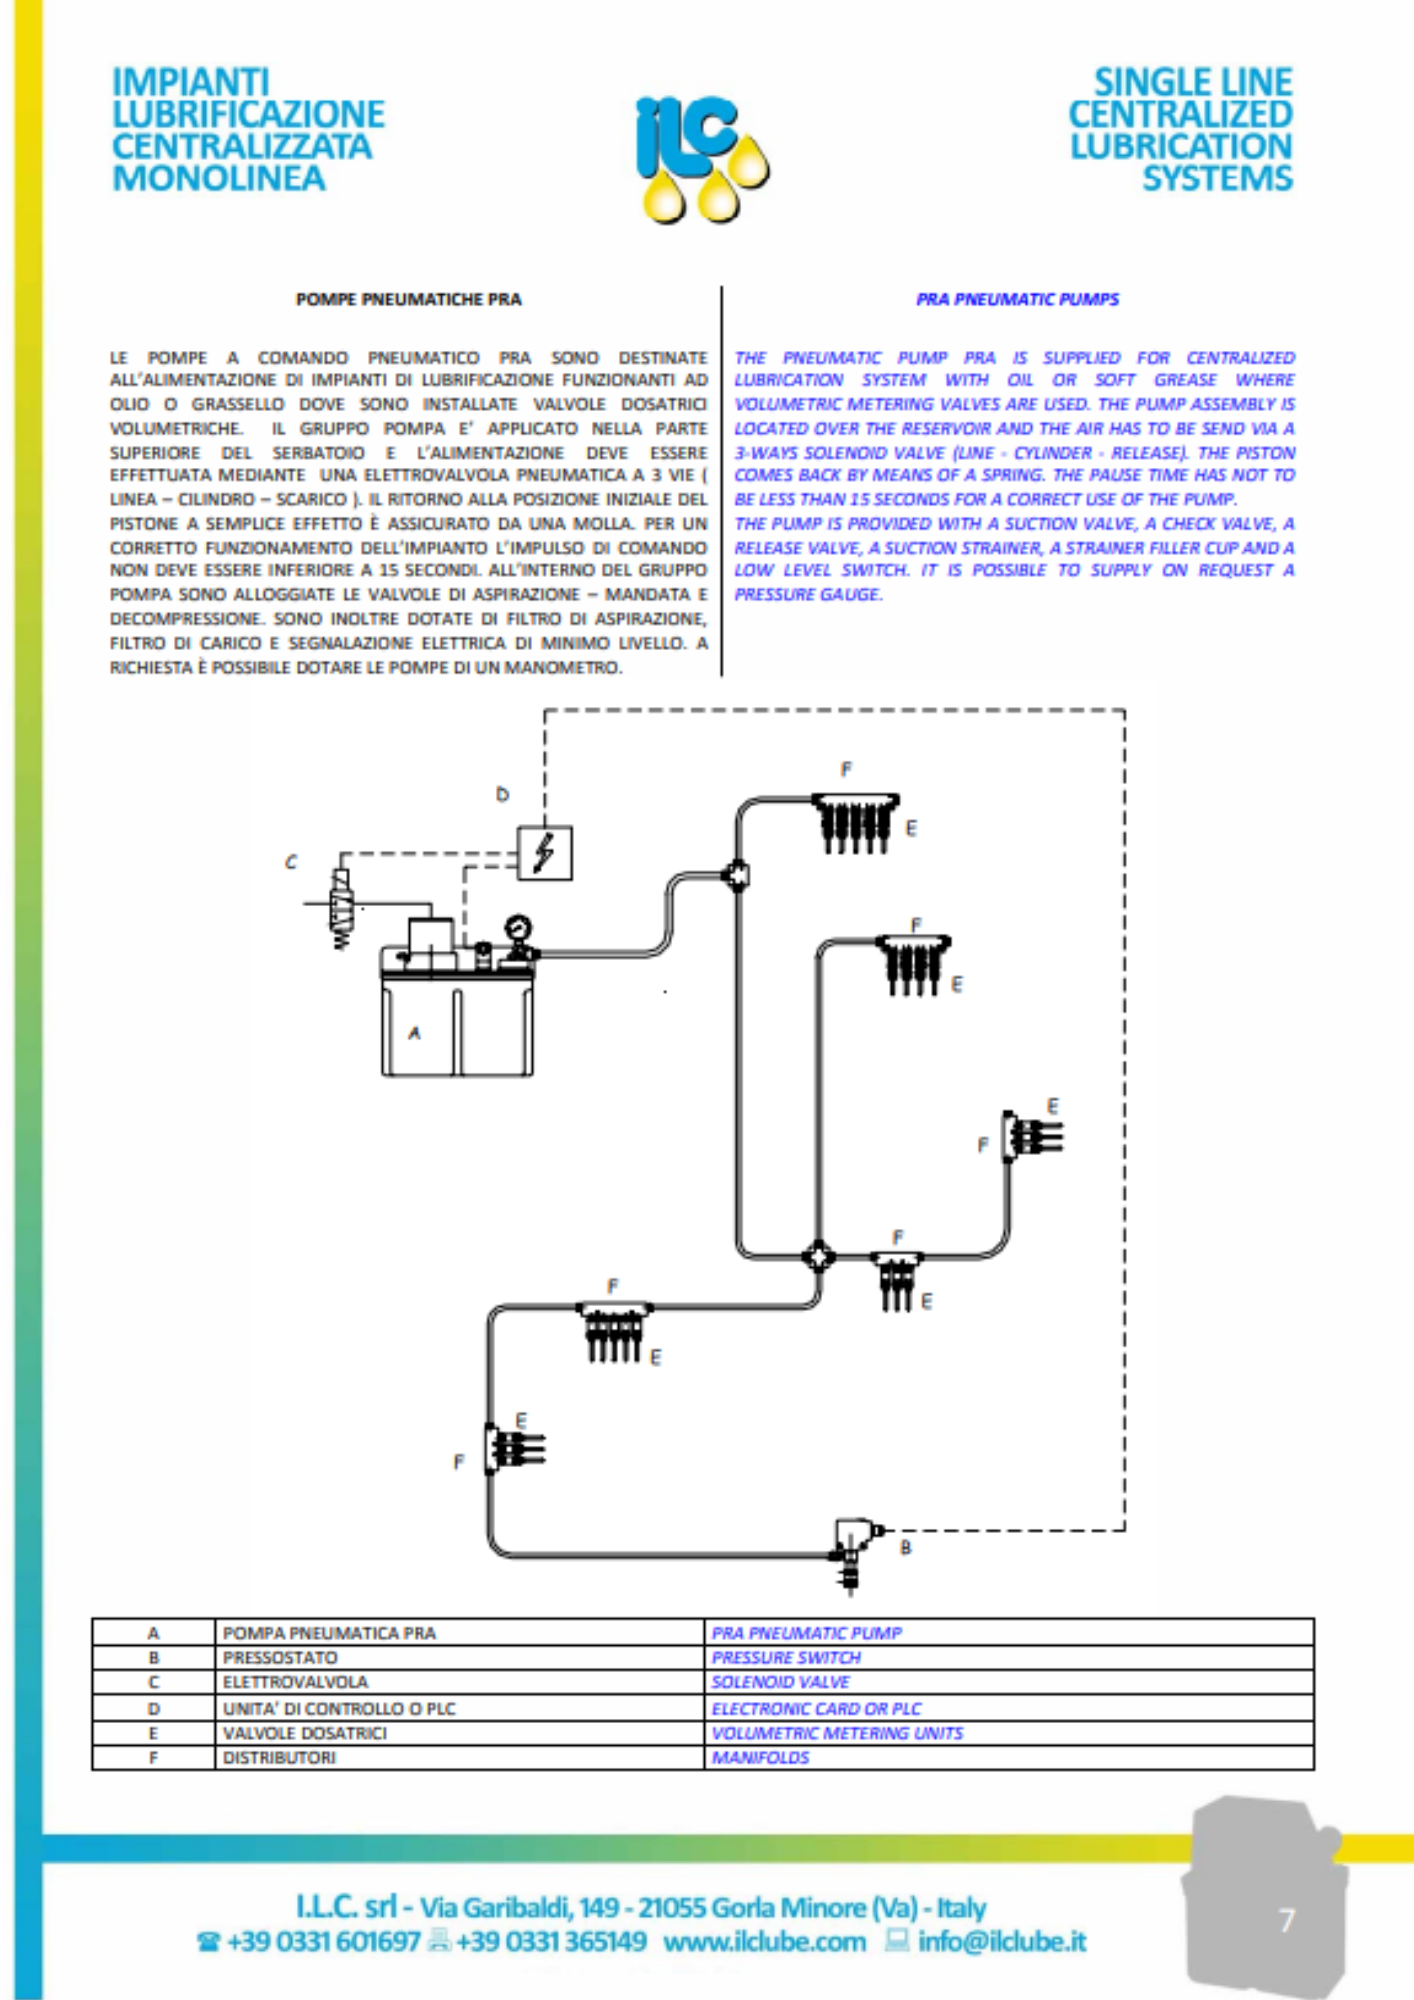 ILC: lubricaciónistemas de lubricación volumétrica (serie PRA)